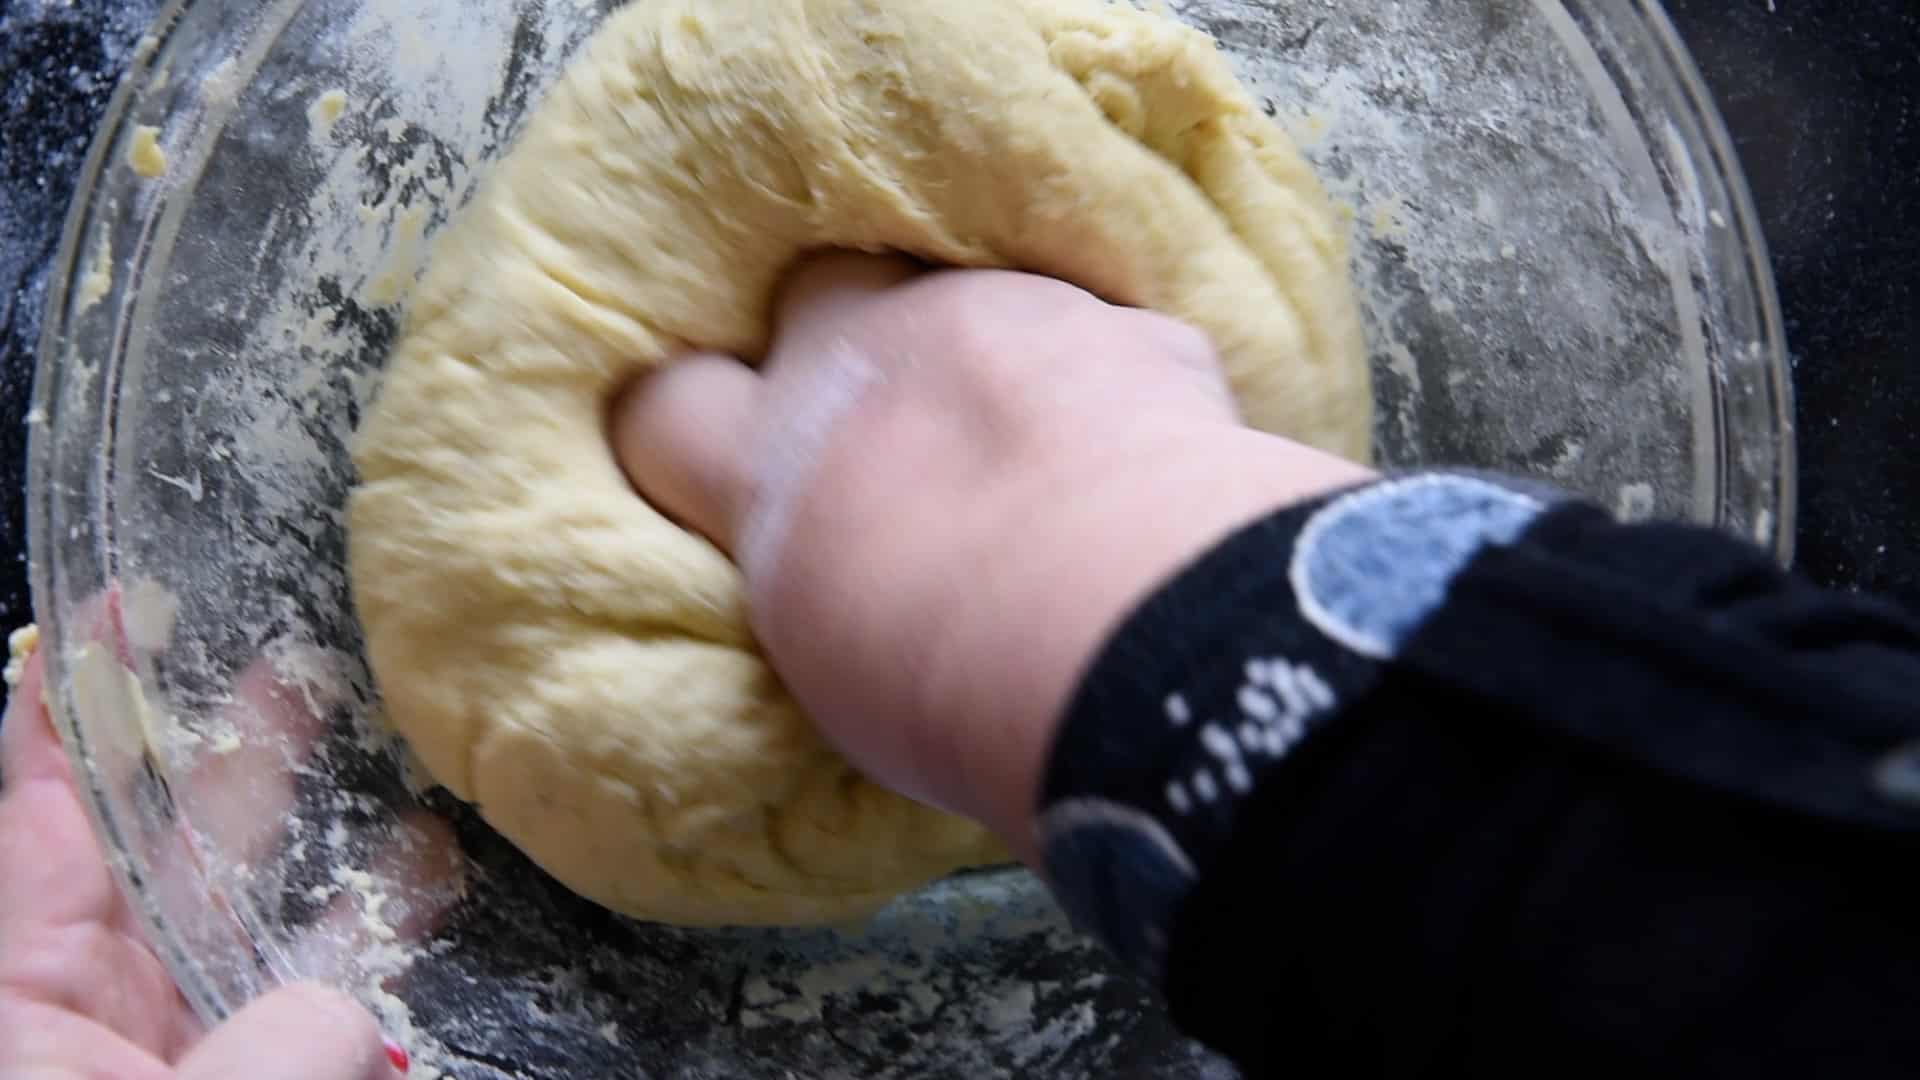 Dough consistency